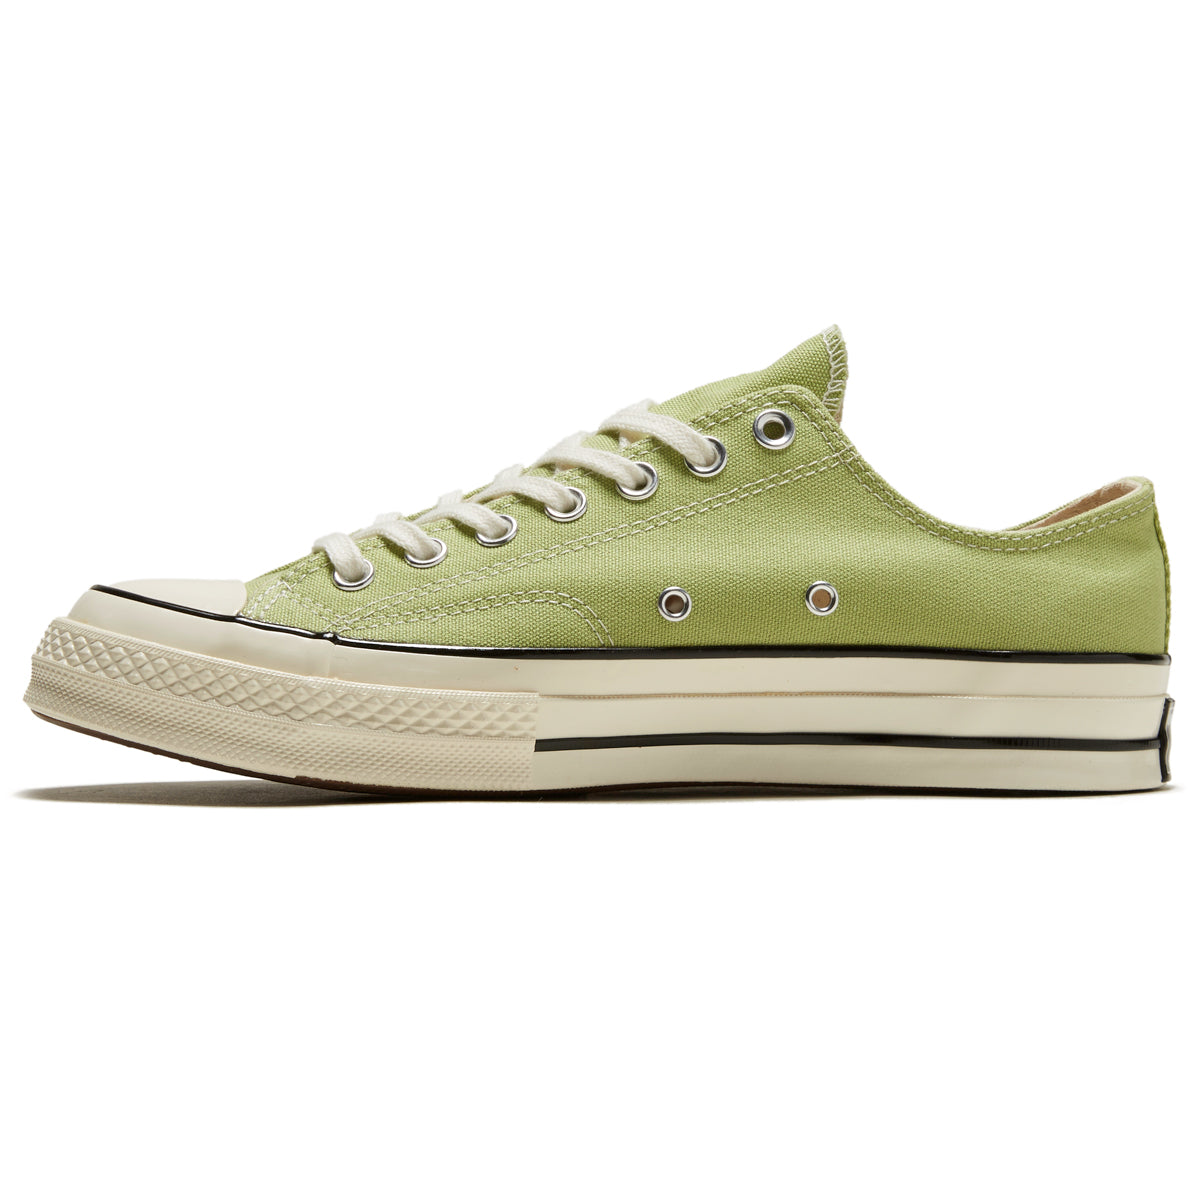 Converse Chuck 70 Ox Shoes - Vitality Green/Egret/Black image 2